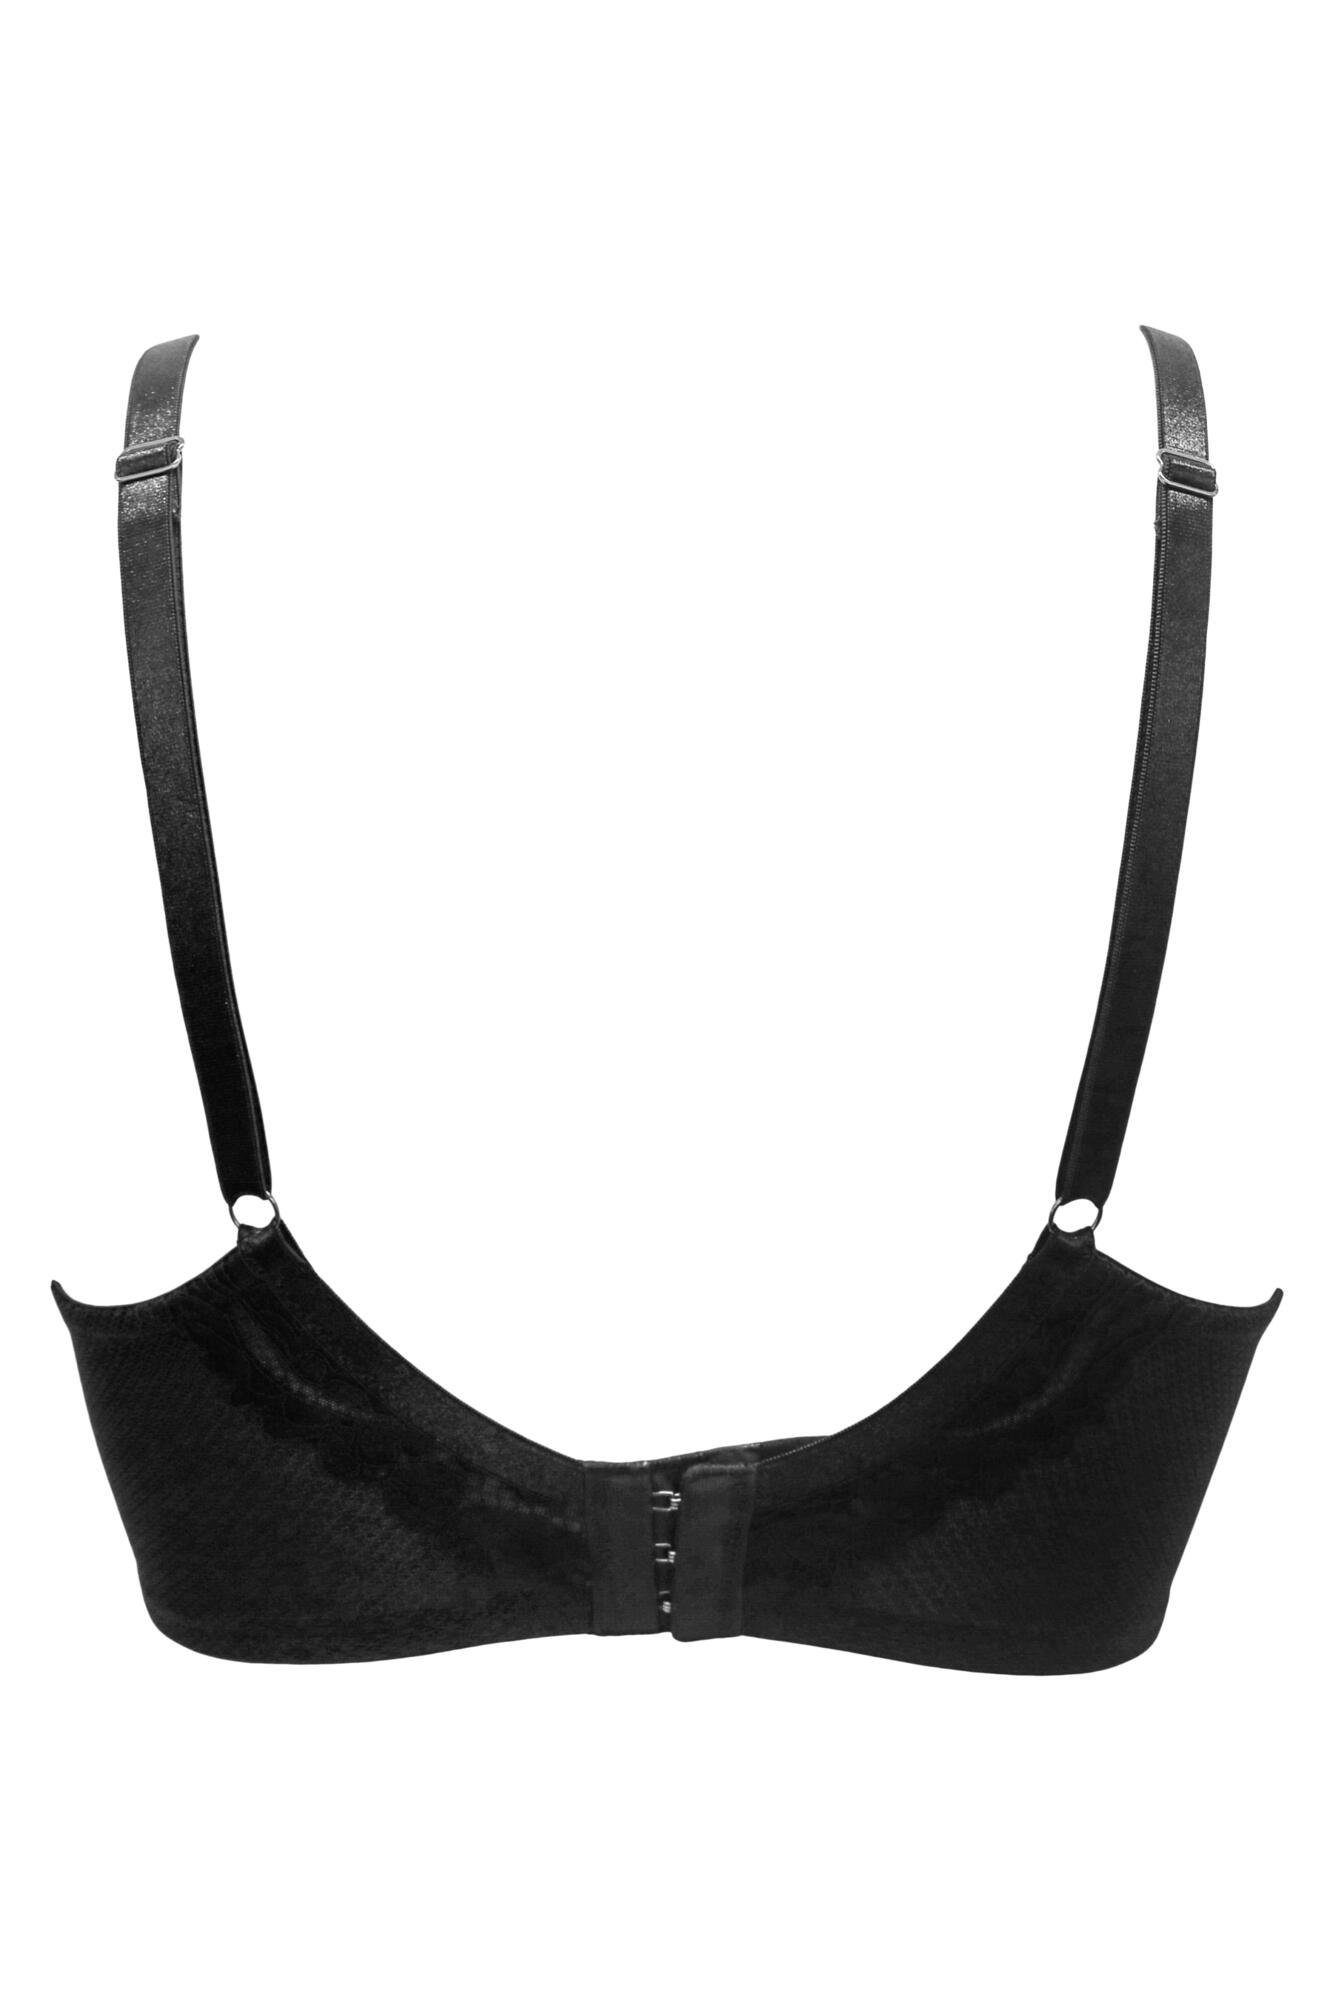 New Look longline push up bra in black animal print